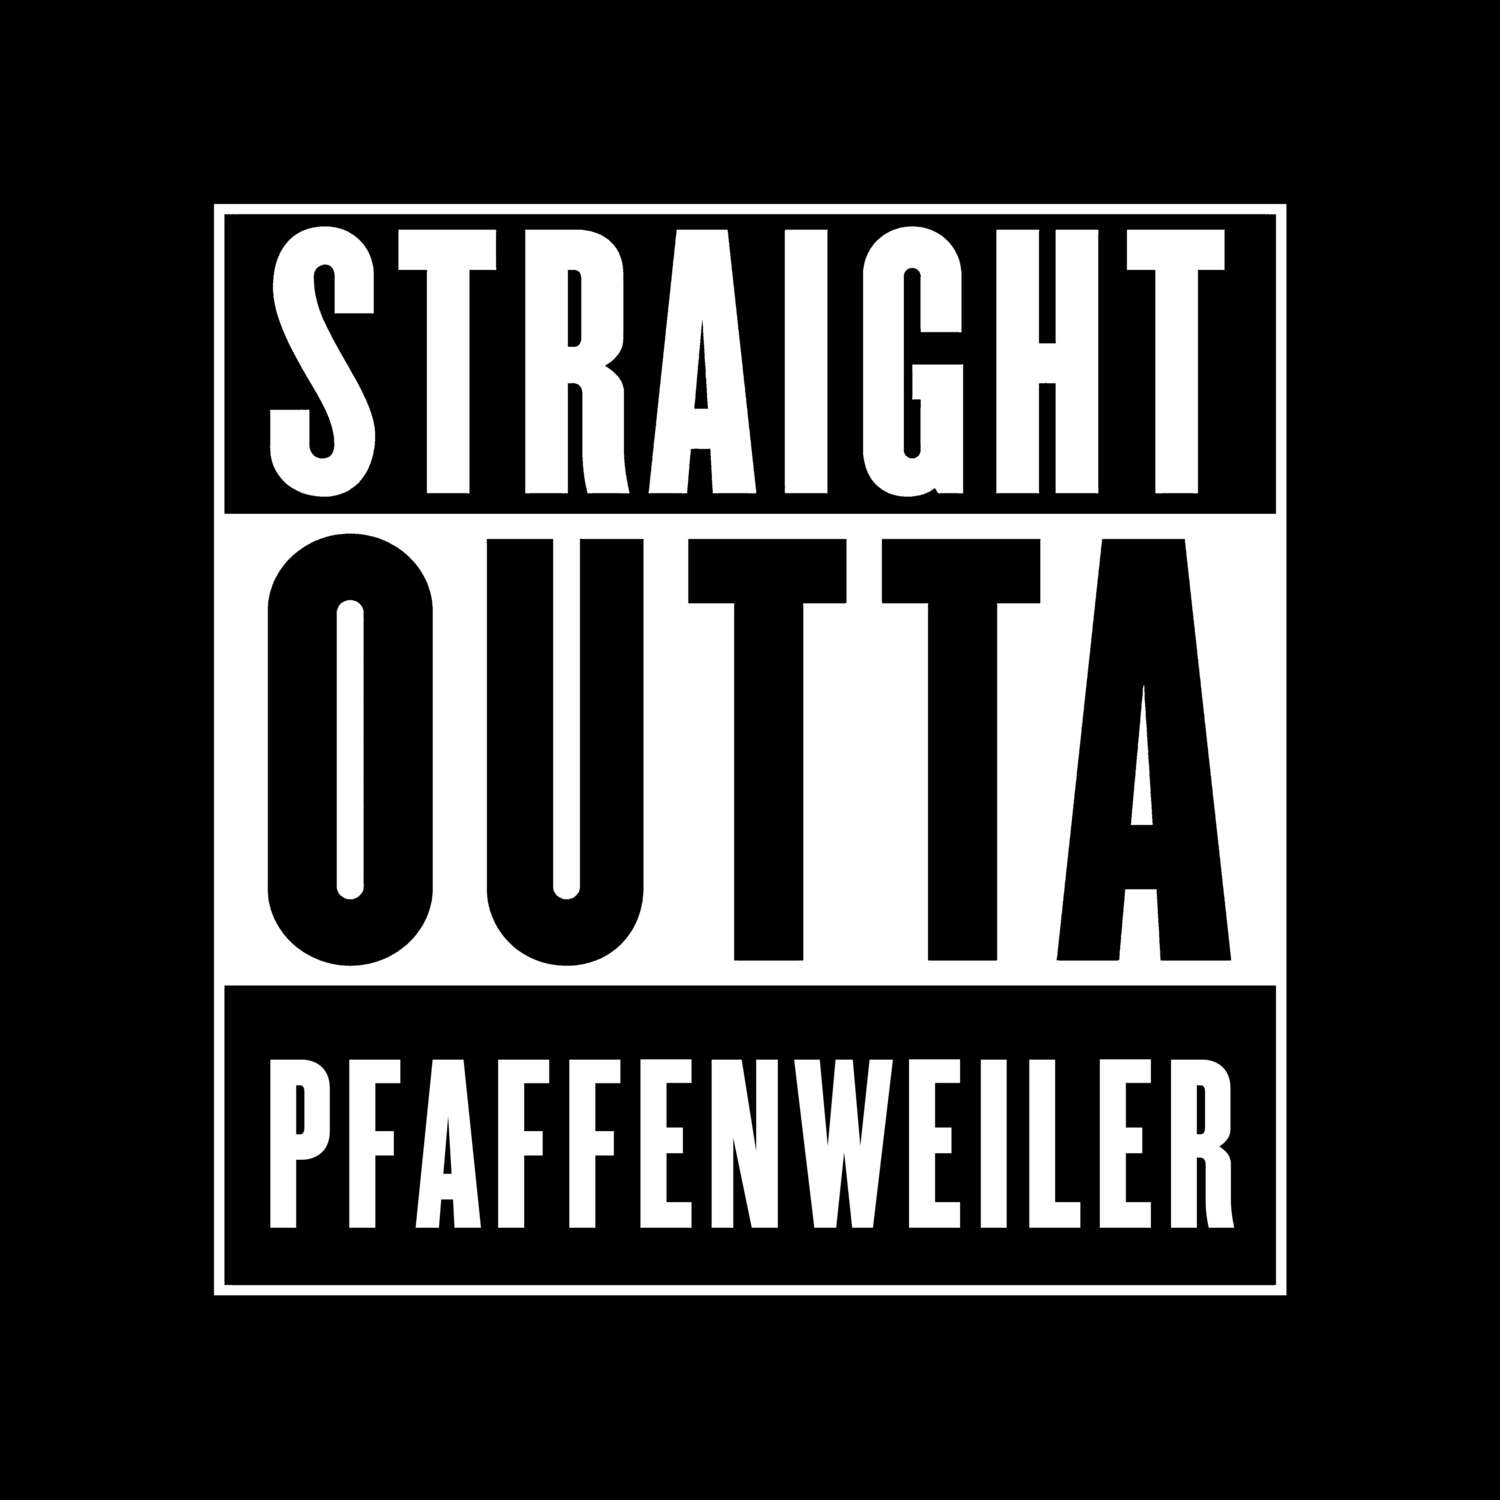 Pfaffenweiler T-Shirt »Straight Outta«